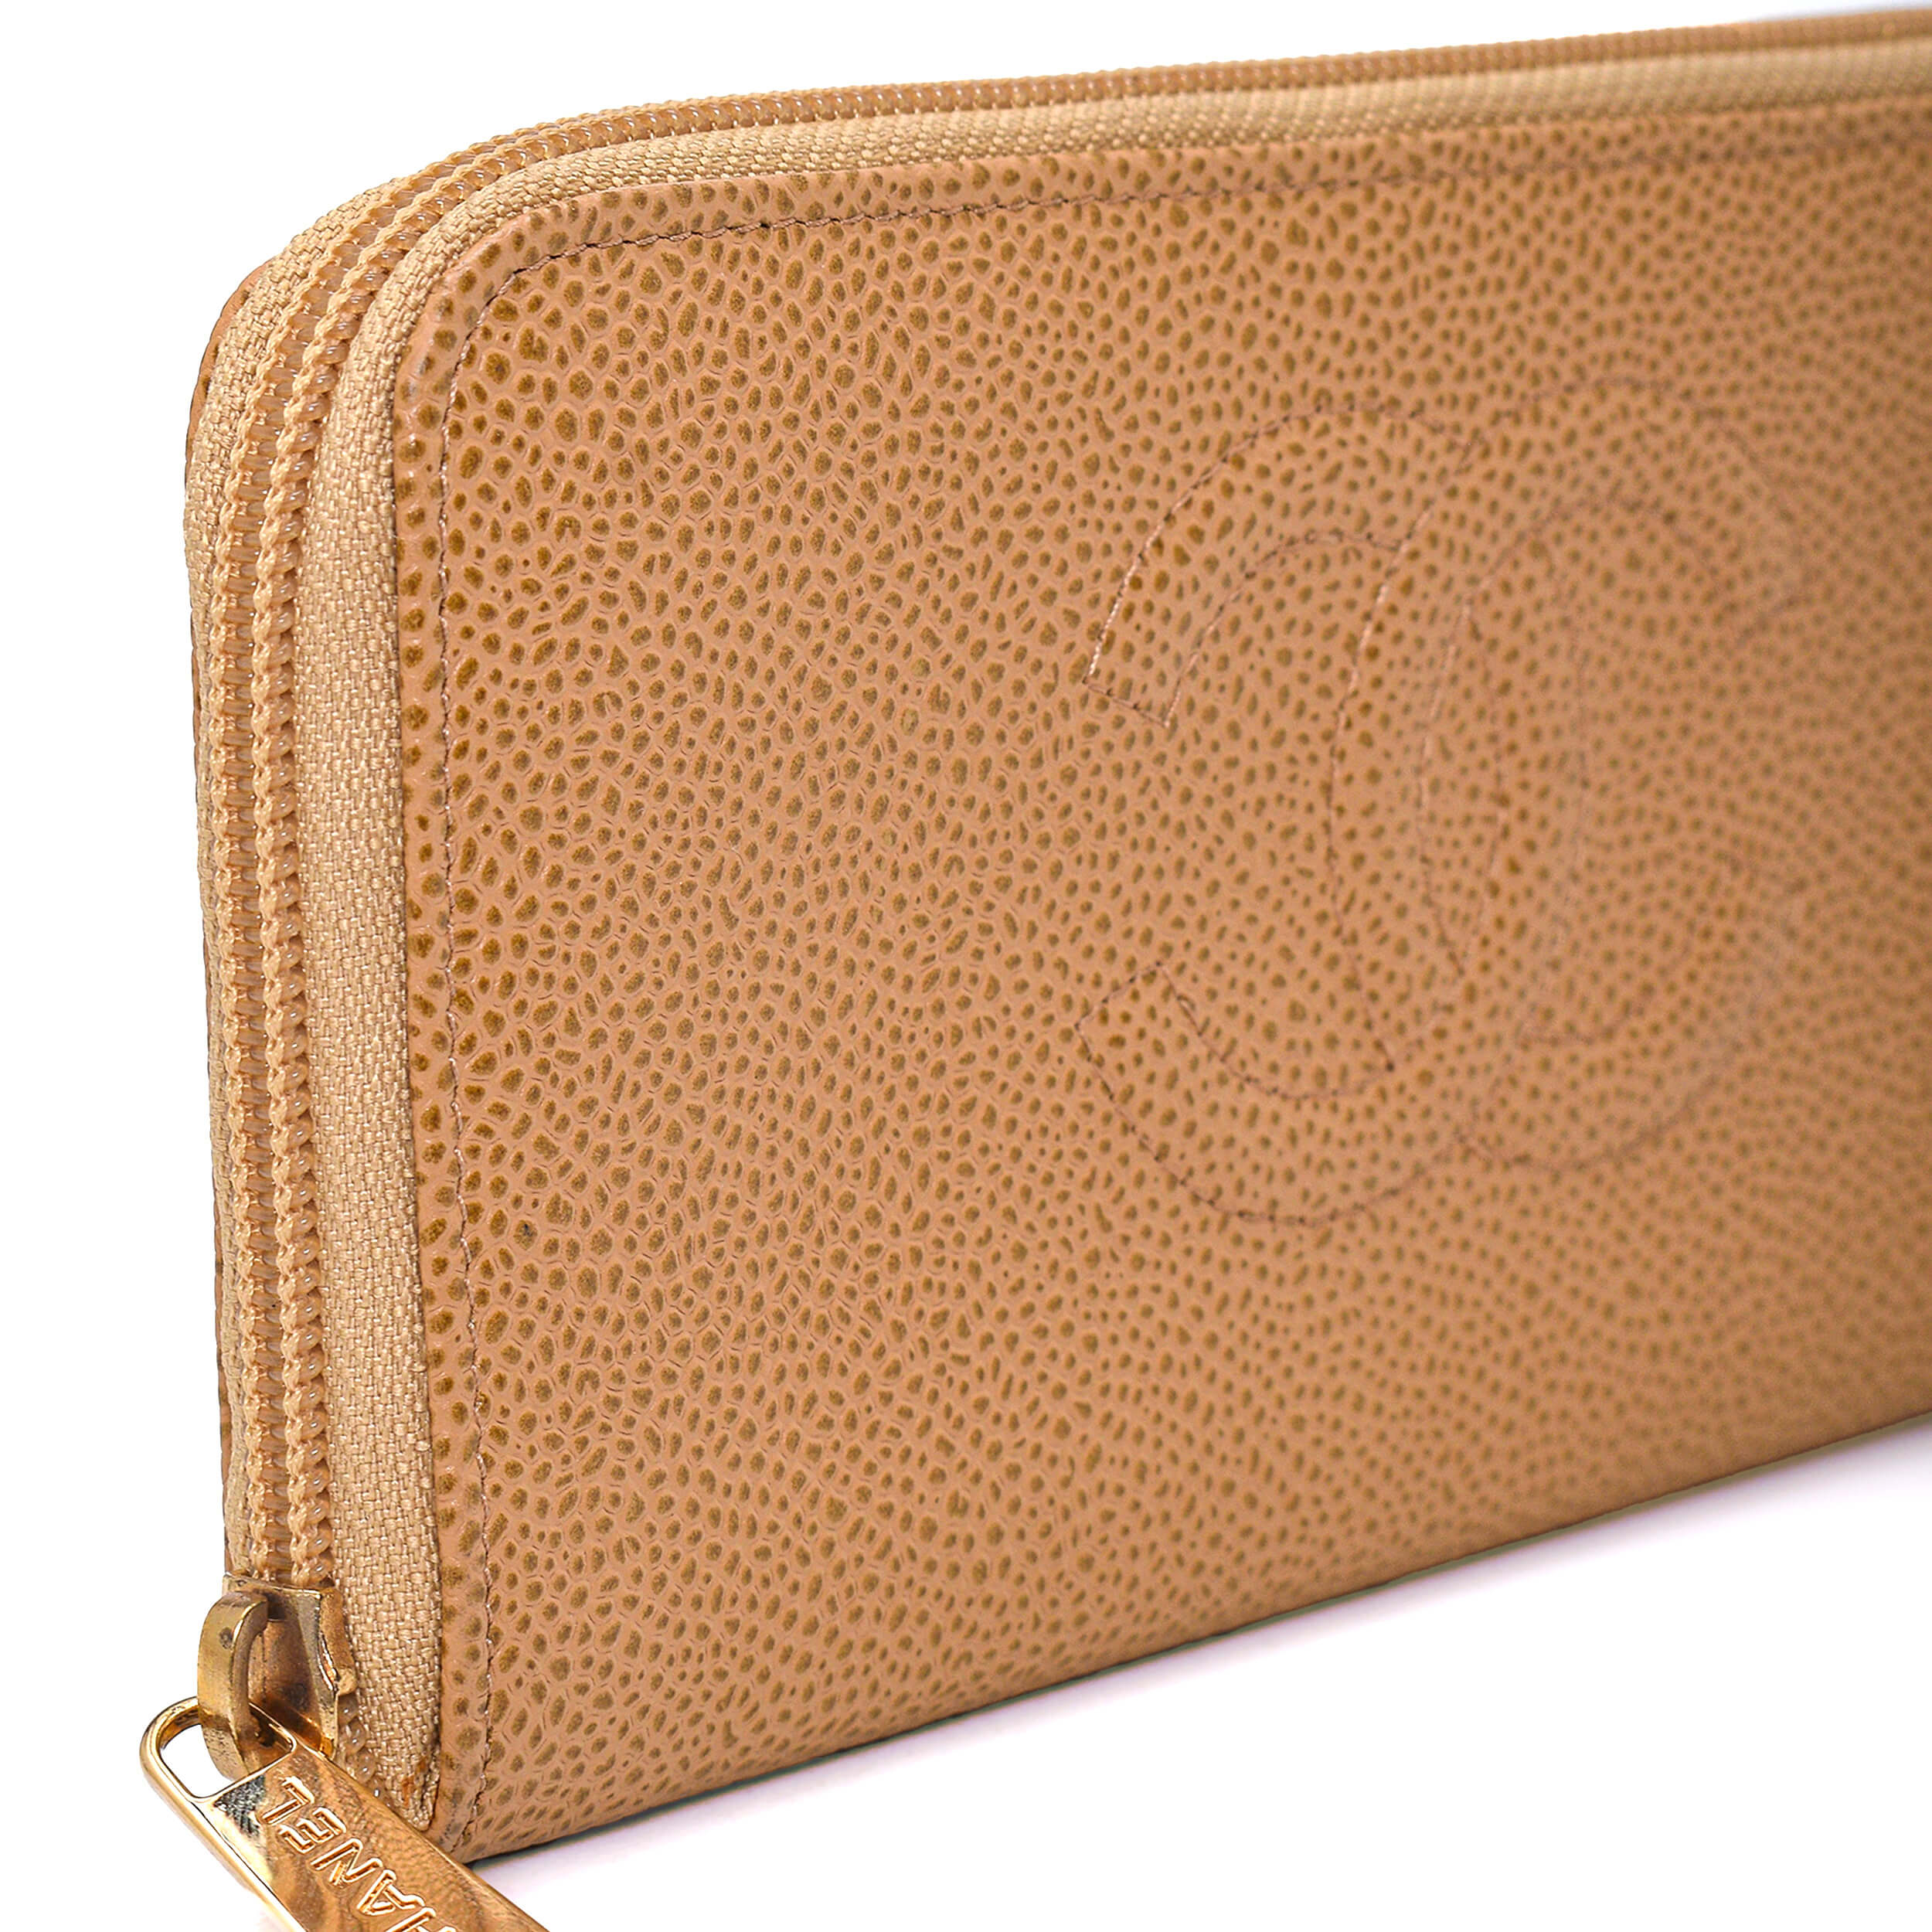 Chanel - Beige Caviar Leather CC Timeless Zip Wallet